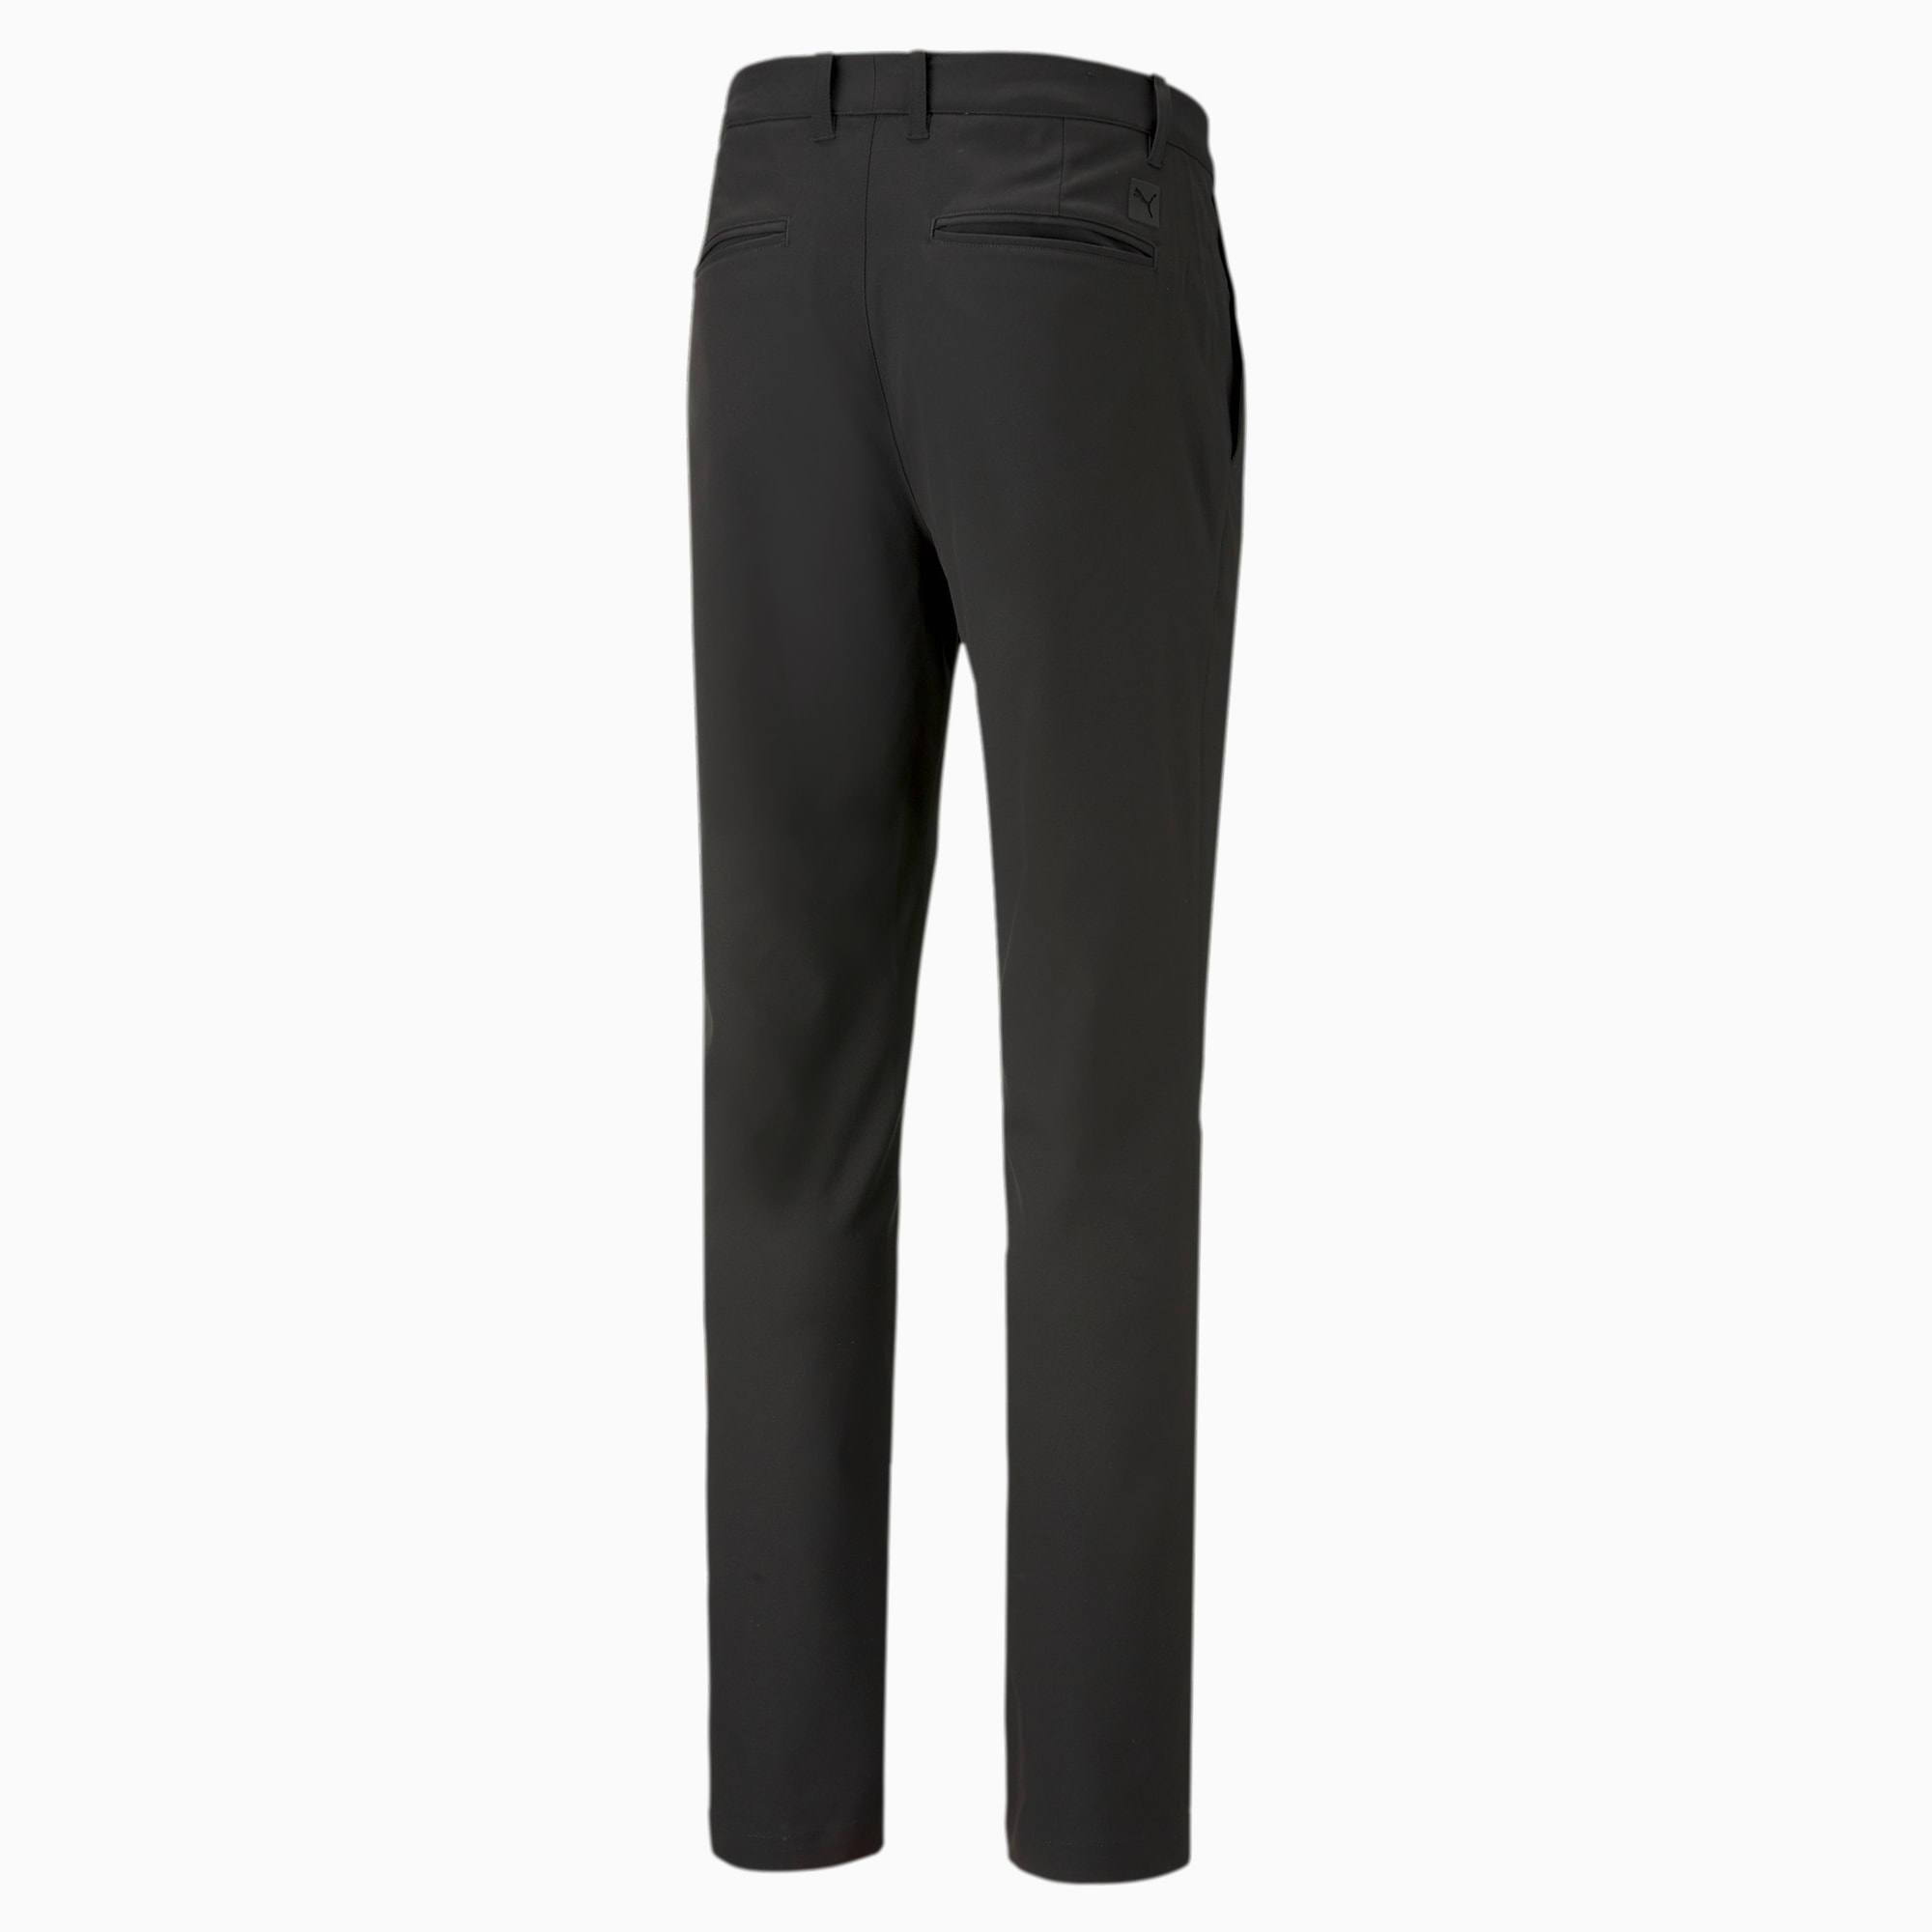 PUMA Dealer Tailored Golf Pants Men, Black, Size 38/32, Clothing